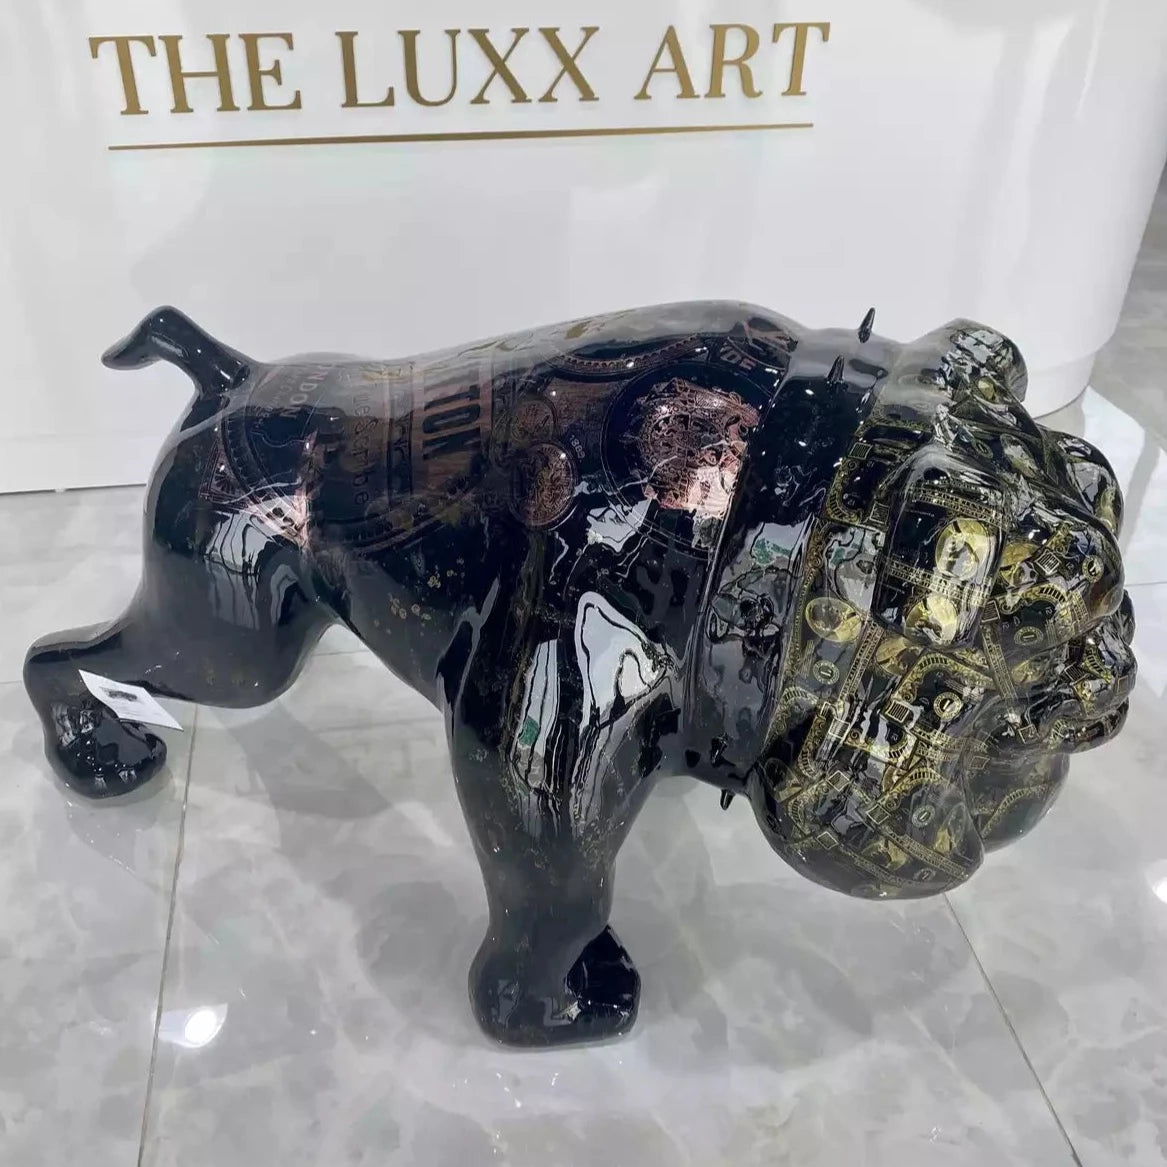 Custom Louis Vuitton & Supreme Design Bulldog-Red – HT Animal